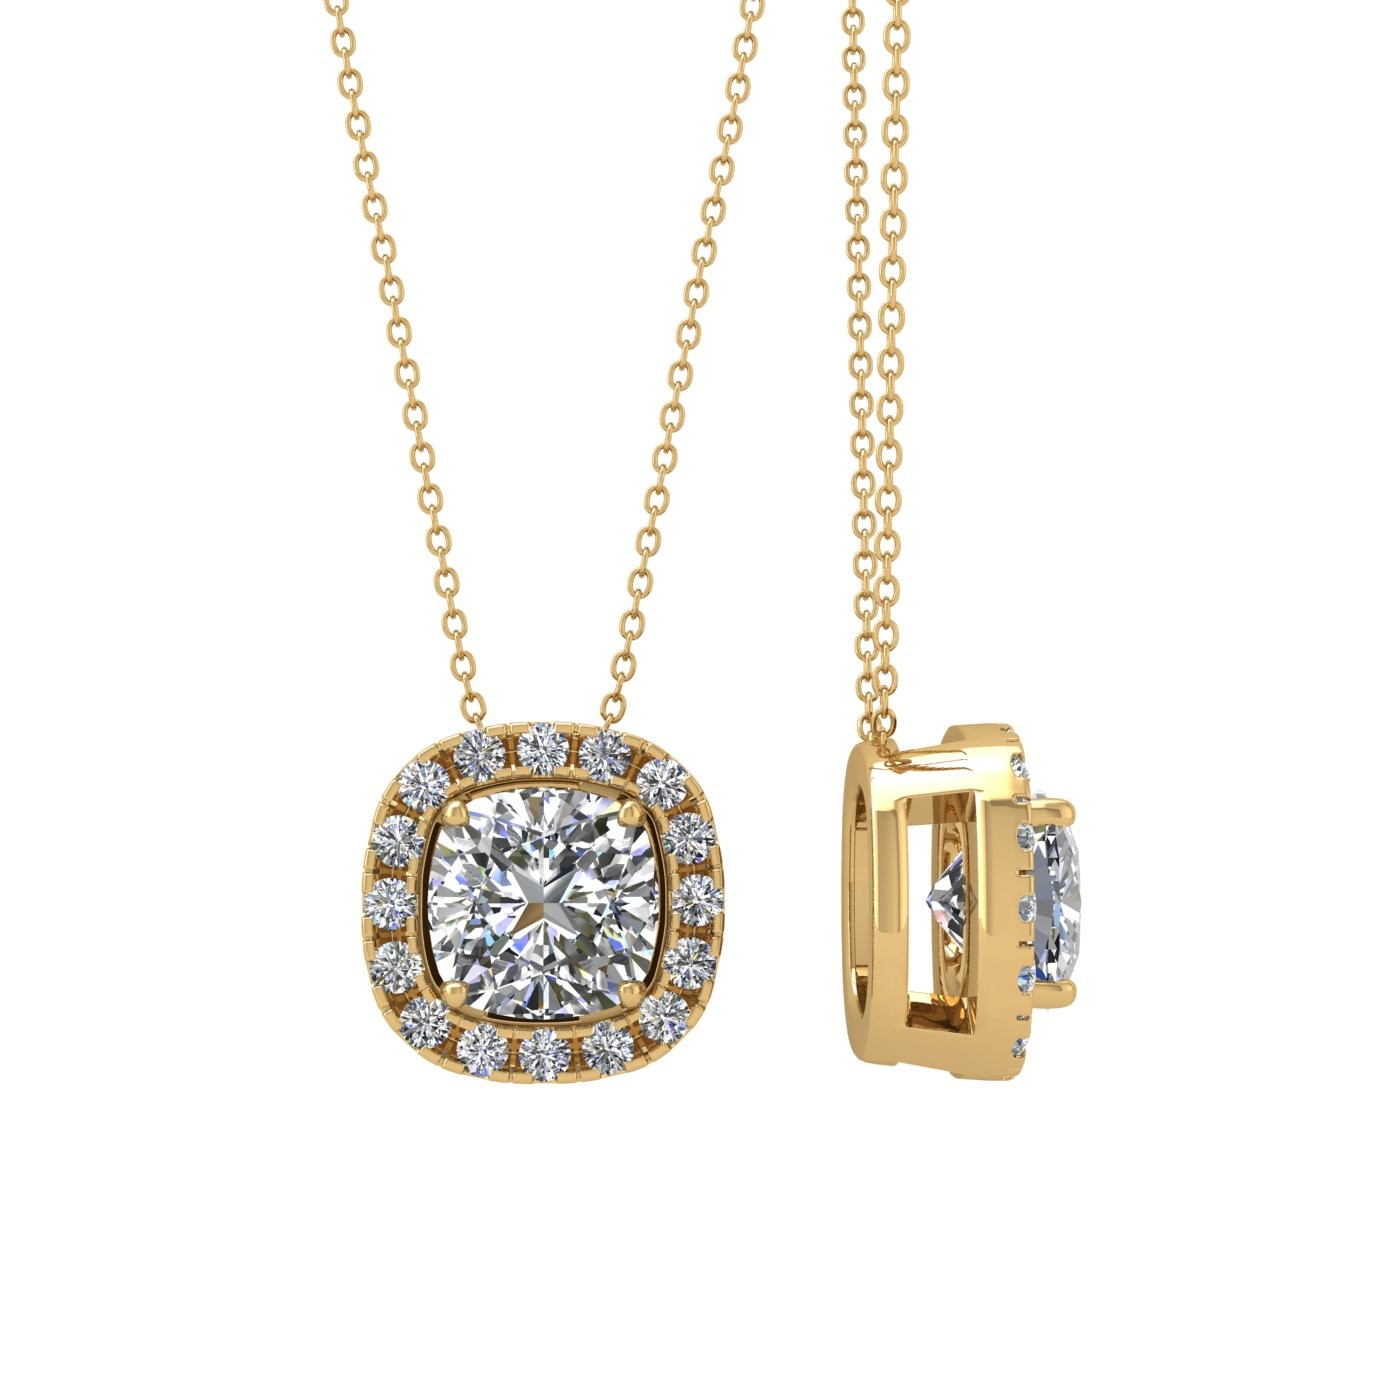 18k yellow gold 0,5 ct 4 prongs cushion shape diamond pendant with diamond pavÉ set halo Photos & images